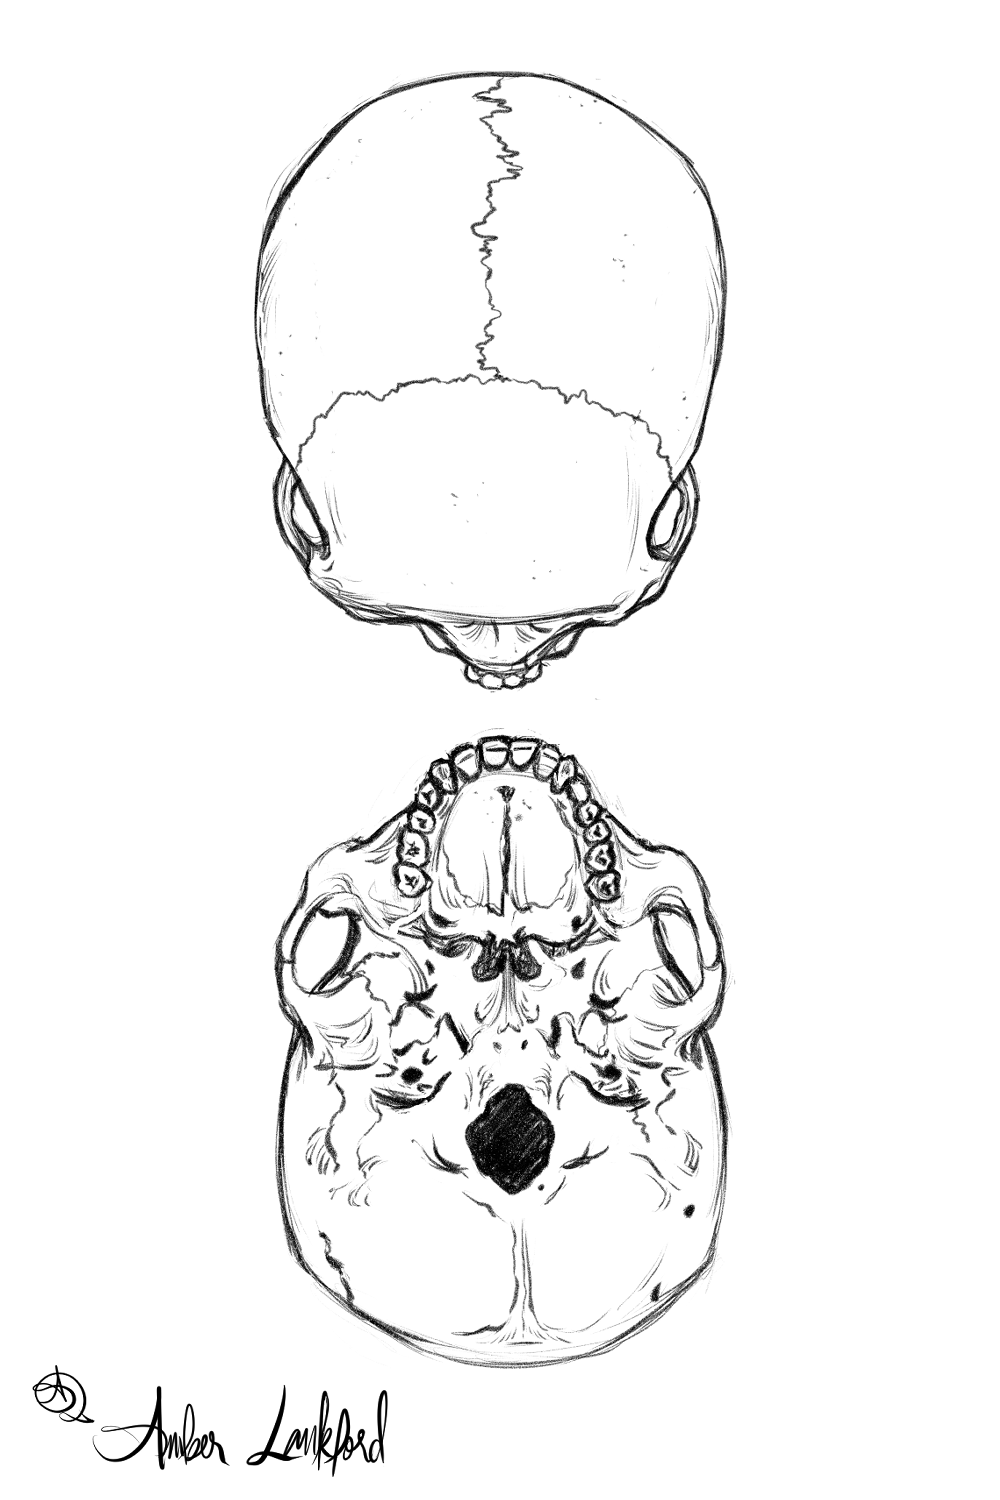 Skull, Superior and Inferior views